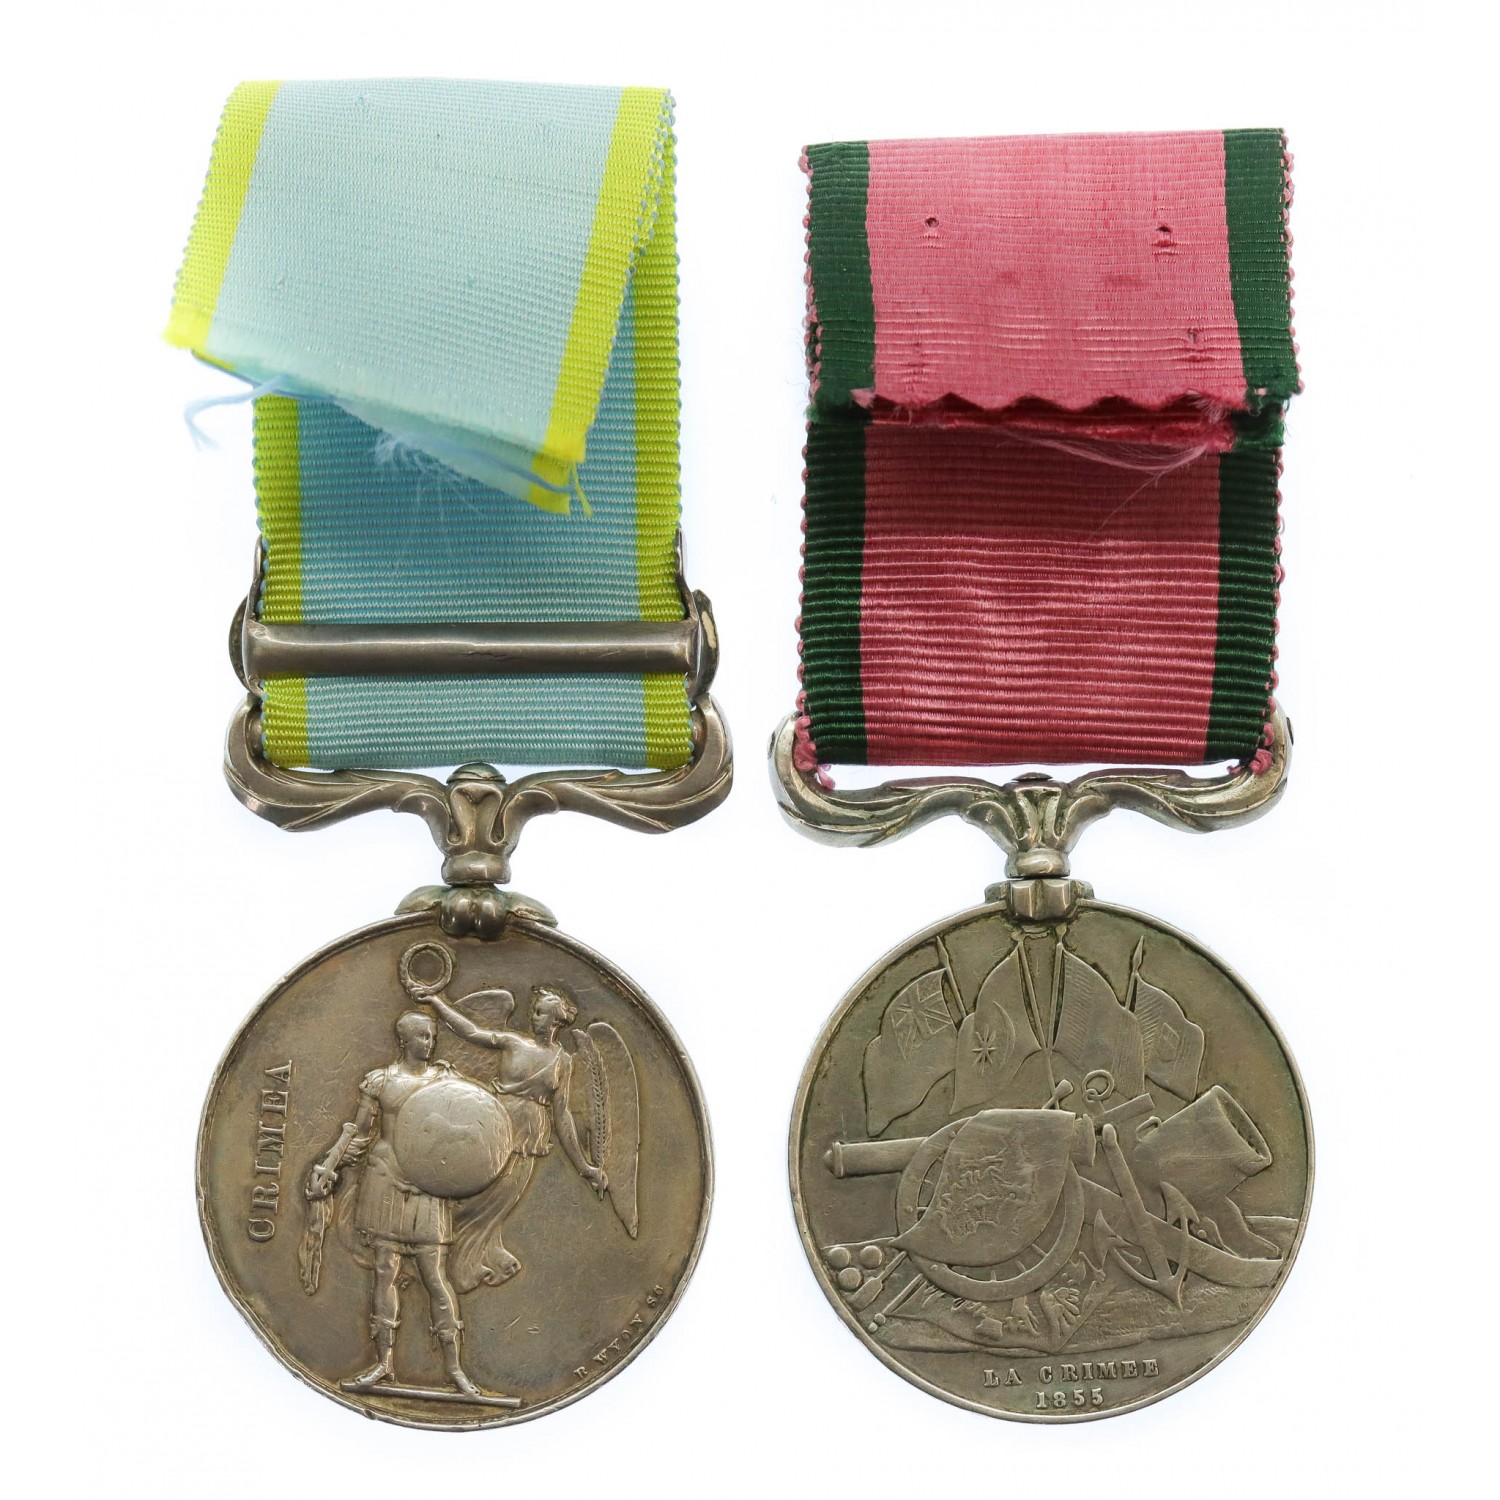 1854 Crimea Medal (Clasp - Sebastopol) and Turkish Crimea Medal Pair